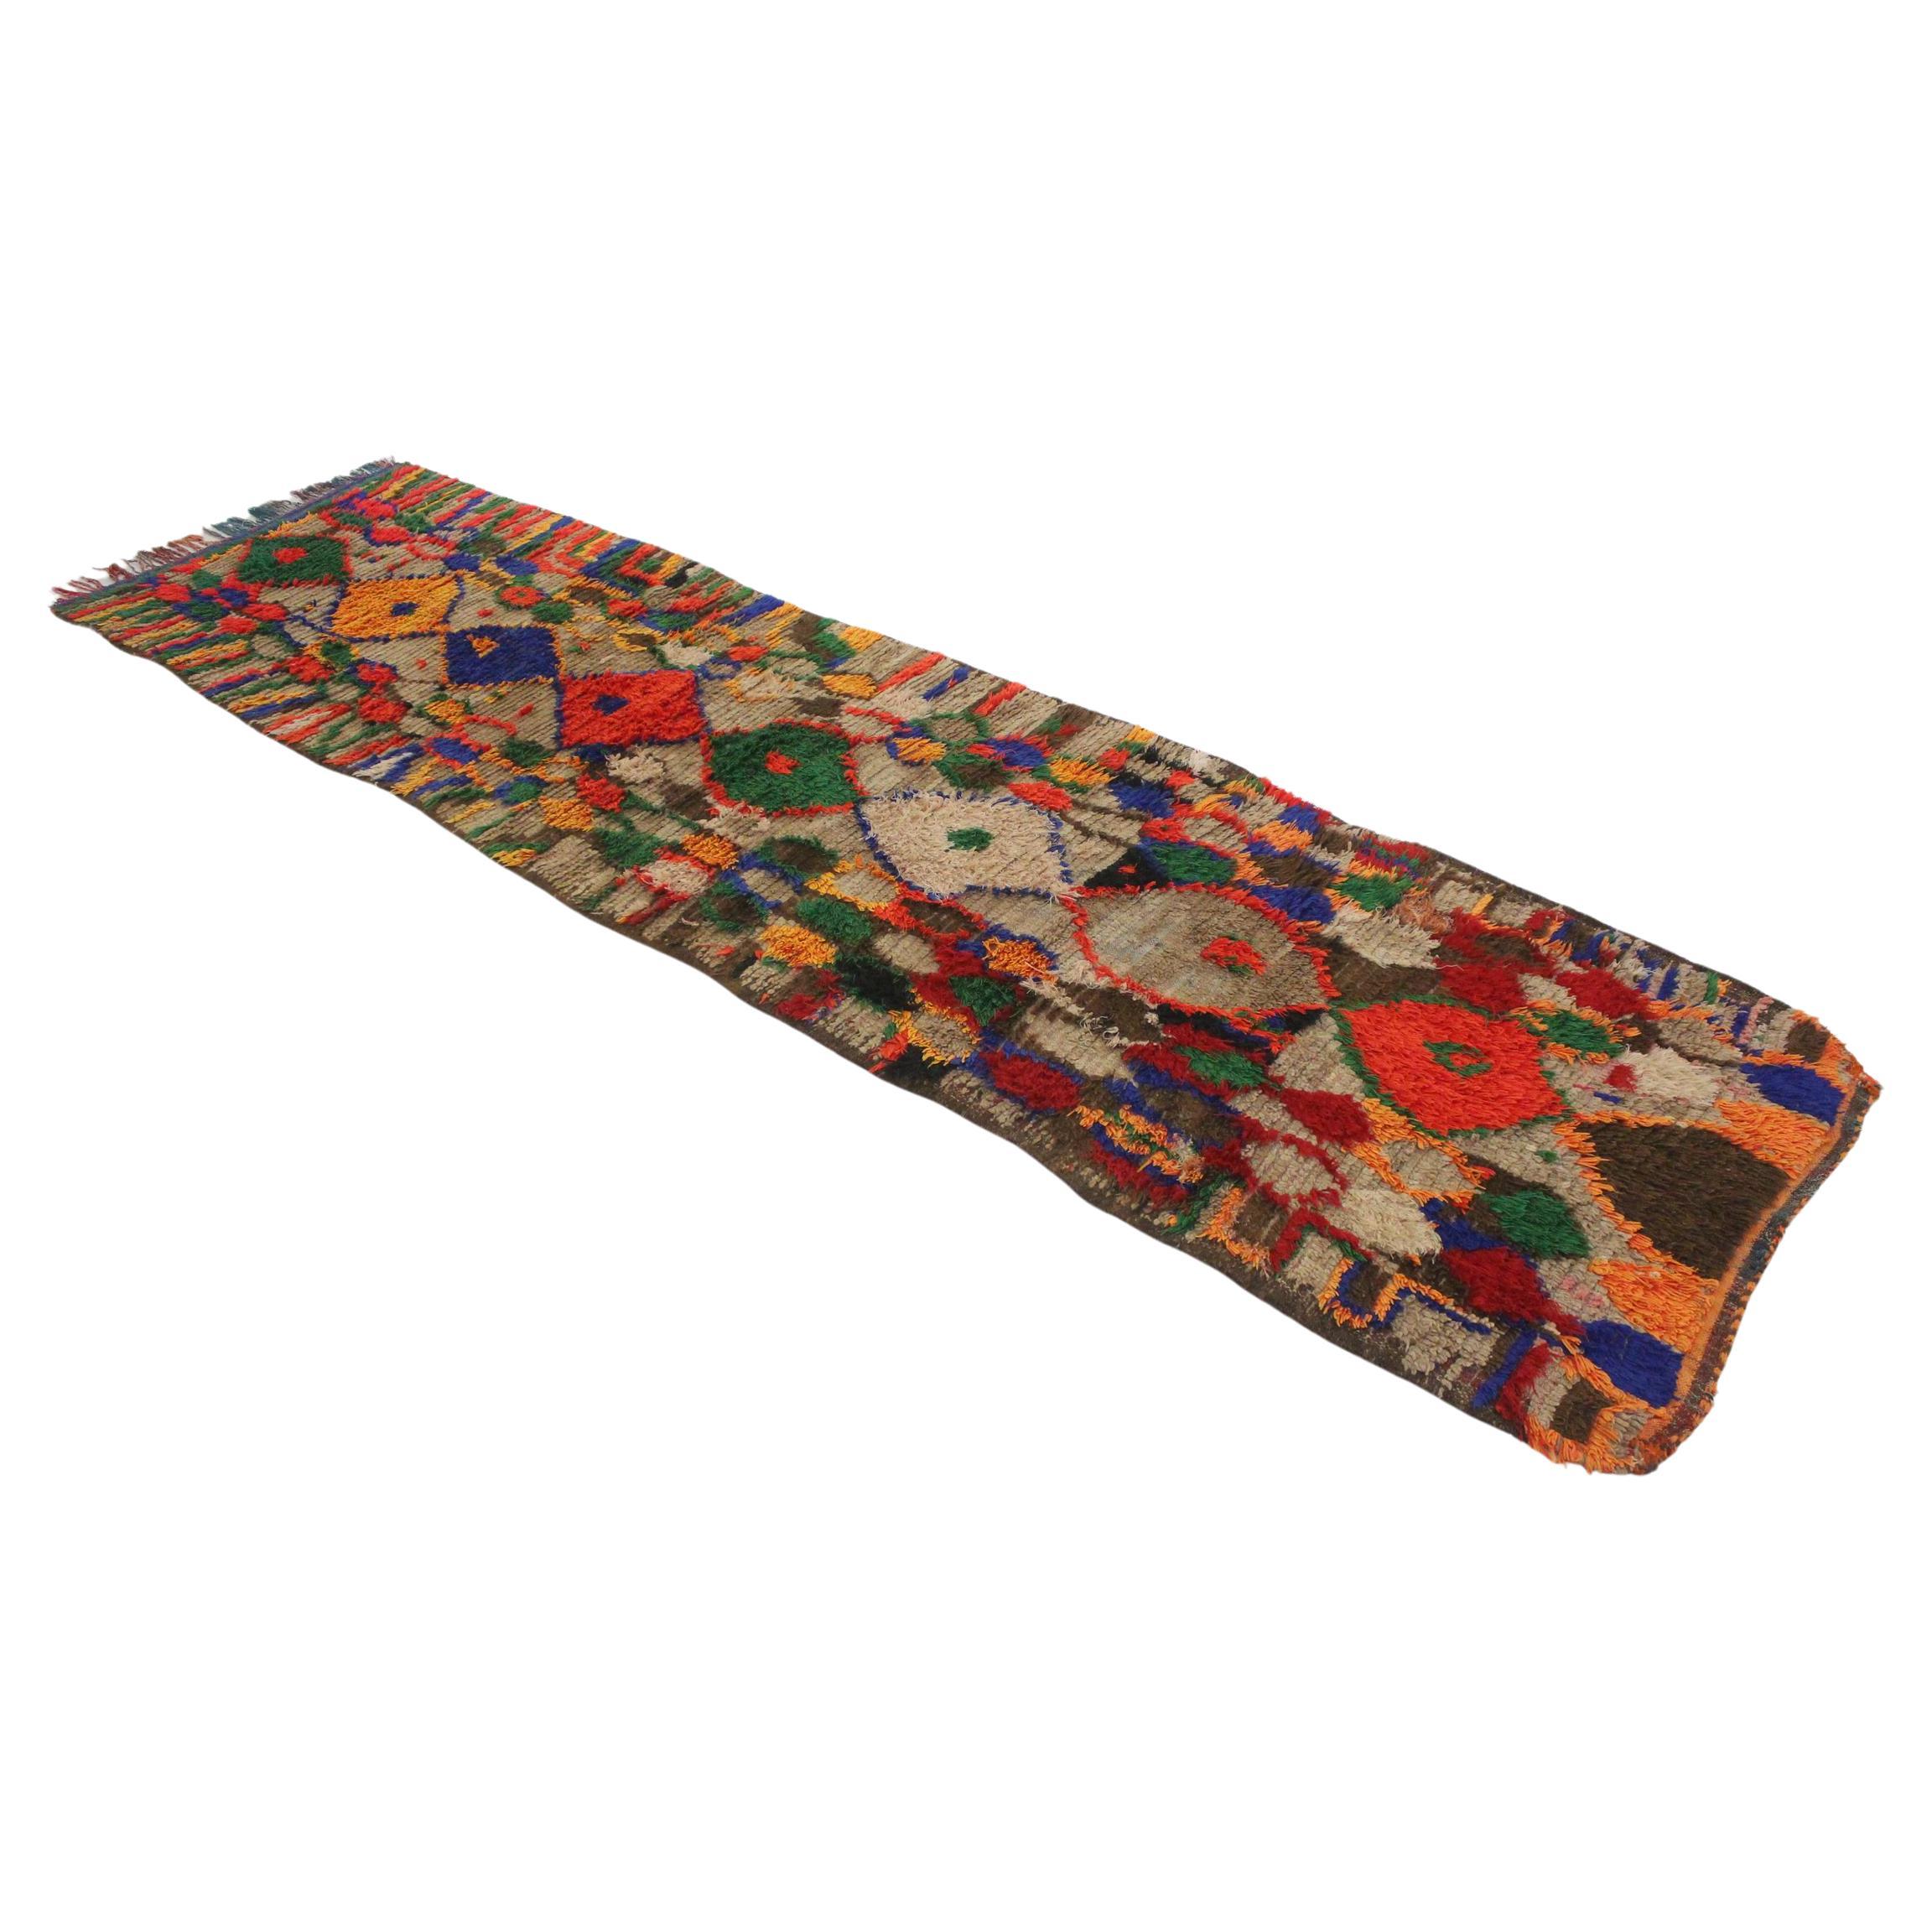 Vintage Moroccan Boujad runner rug - Brown/multicolor - 3.6x12.3feet / 109x377cm For Sale